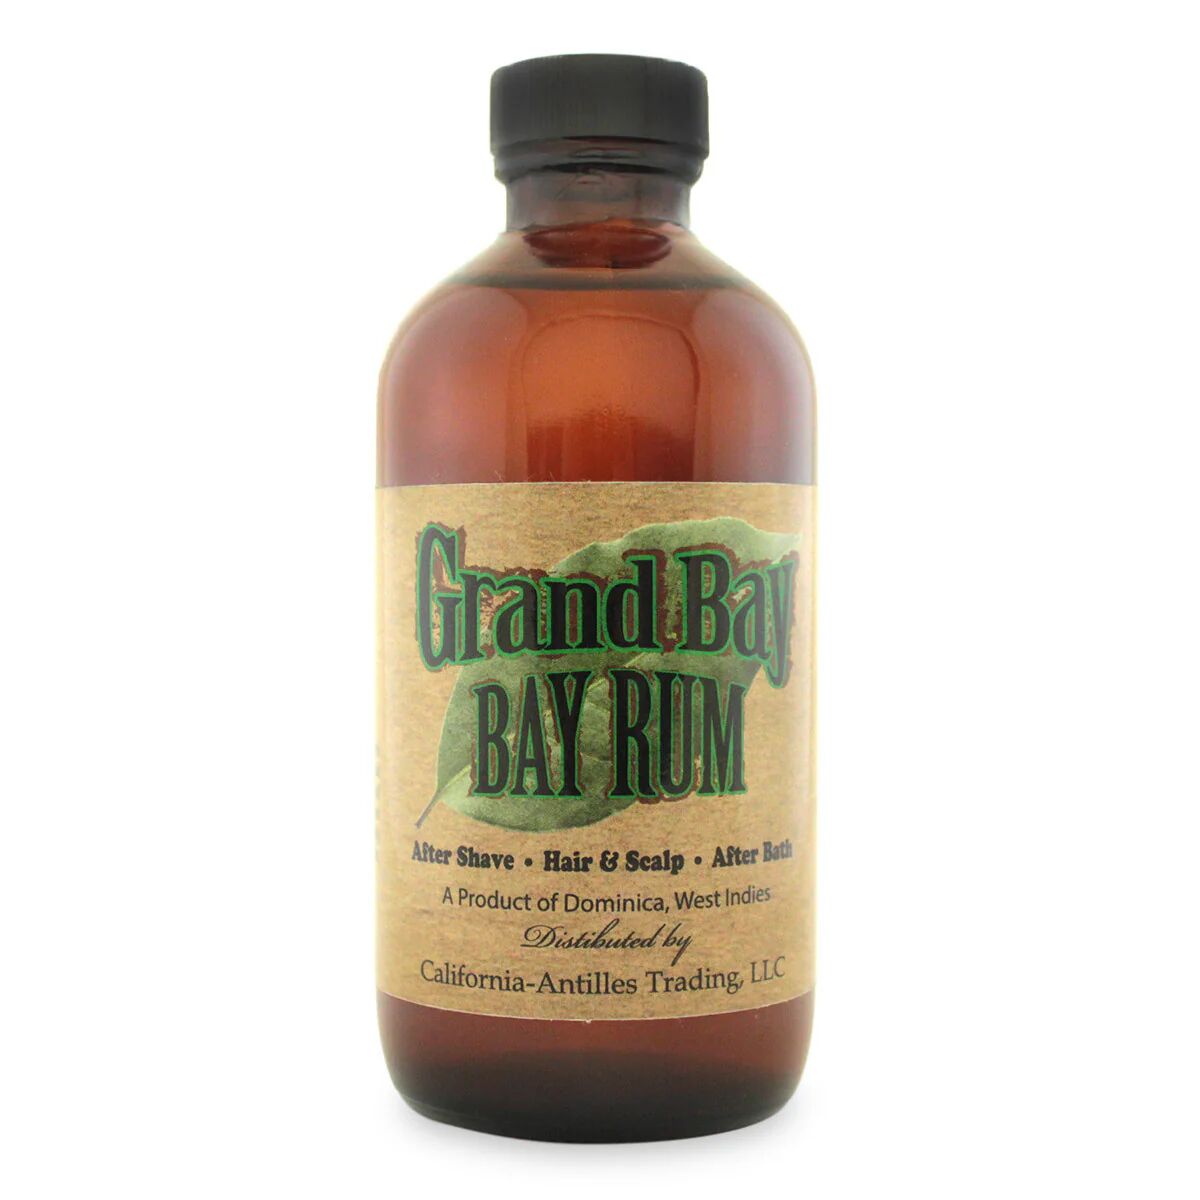 Grand Bay Bay Rum Aftershave (8 fl oz) #10077694